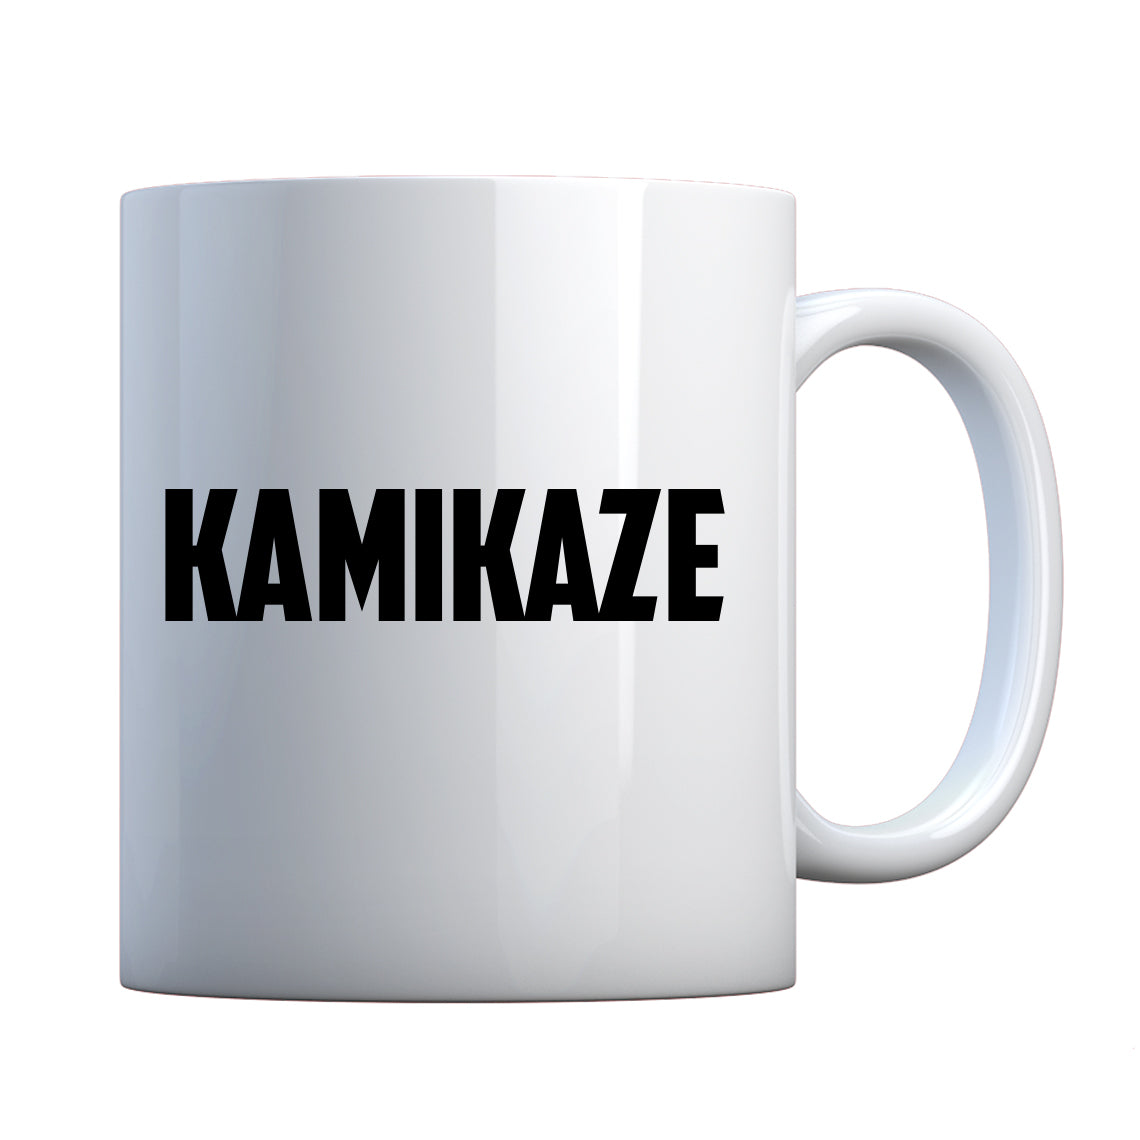 Kamikaze Ceramic Gift Mug